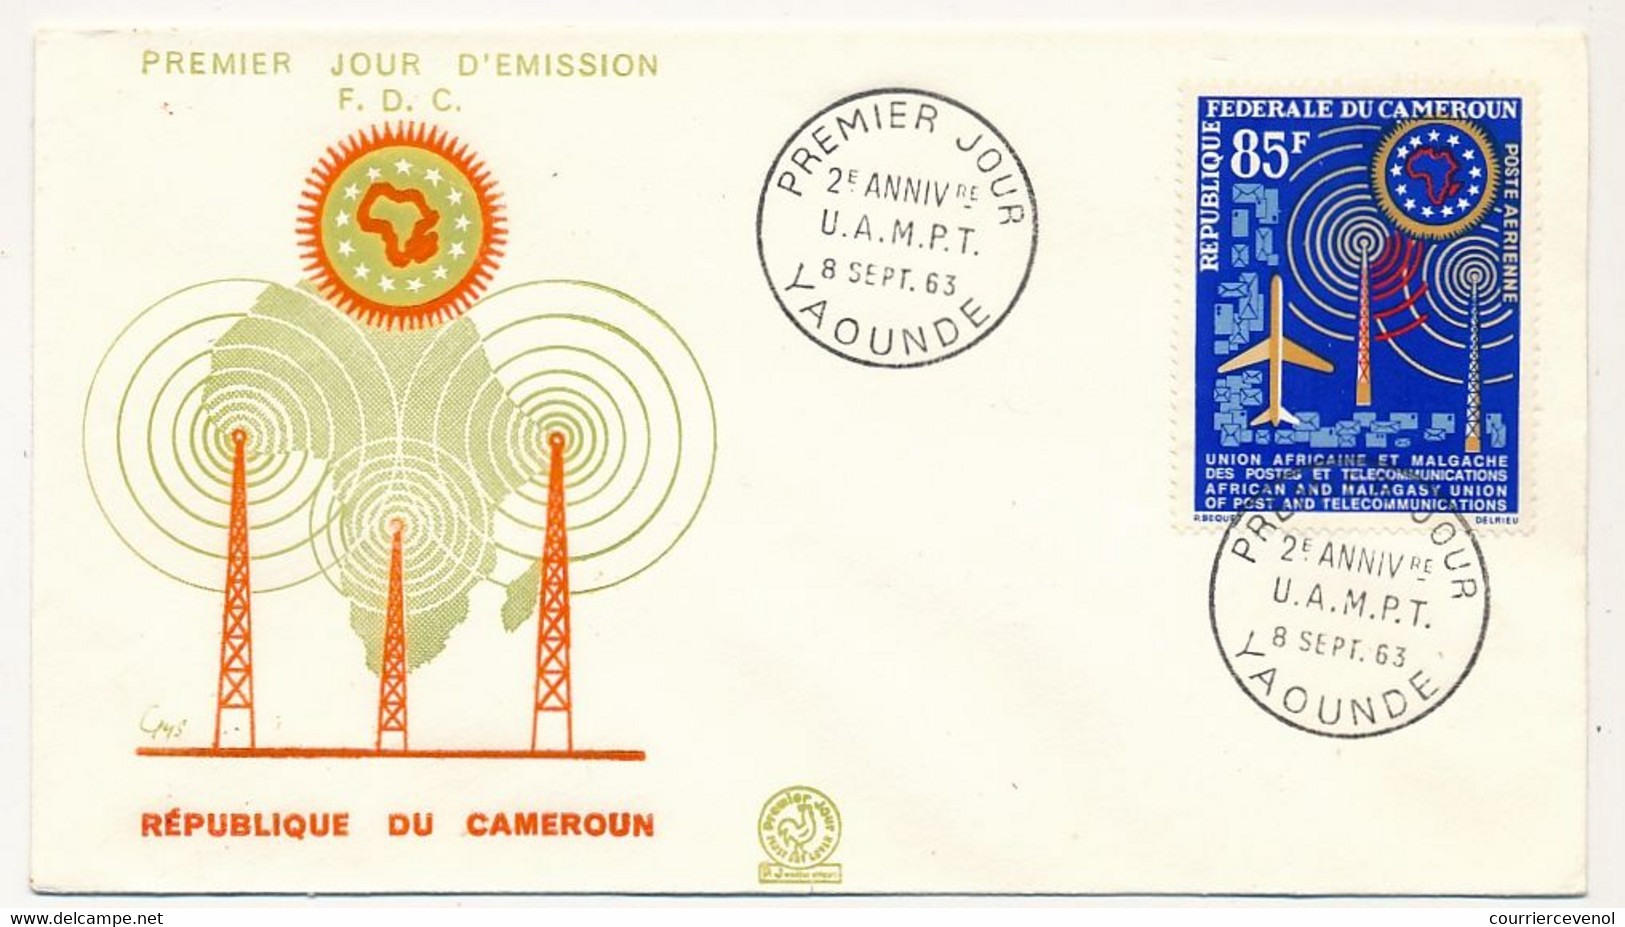 CAMEROUN => Enveloppe FDC - 85F 2eme Anniversaire UAMPT - 8 Sept 1983 - Yaoundé - Cameroun (1960-...)